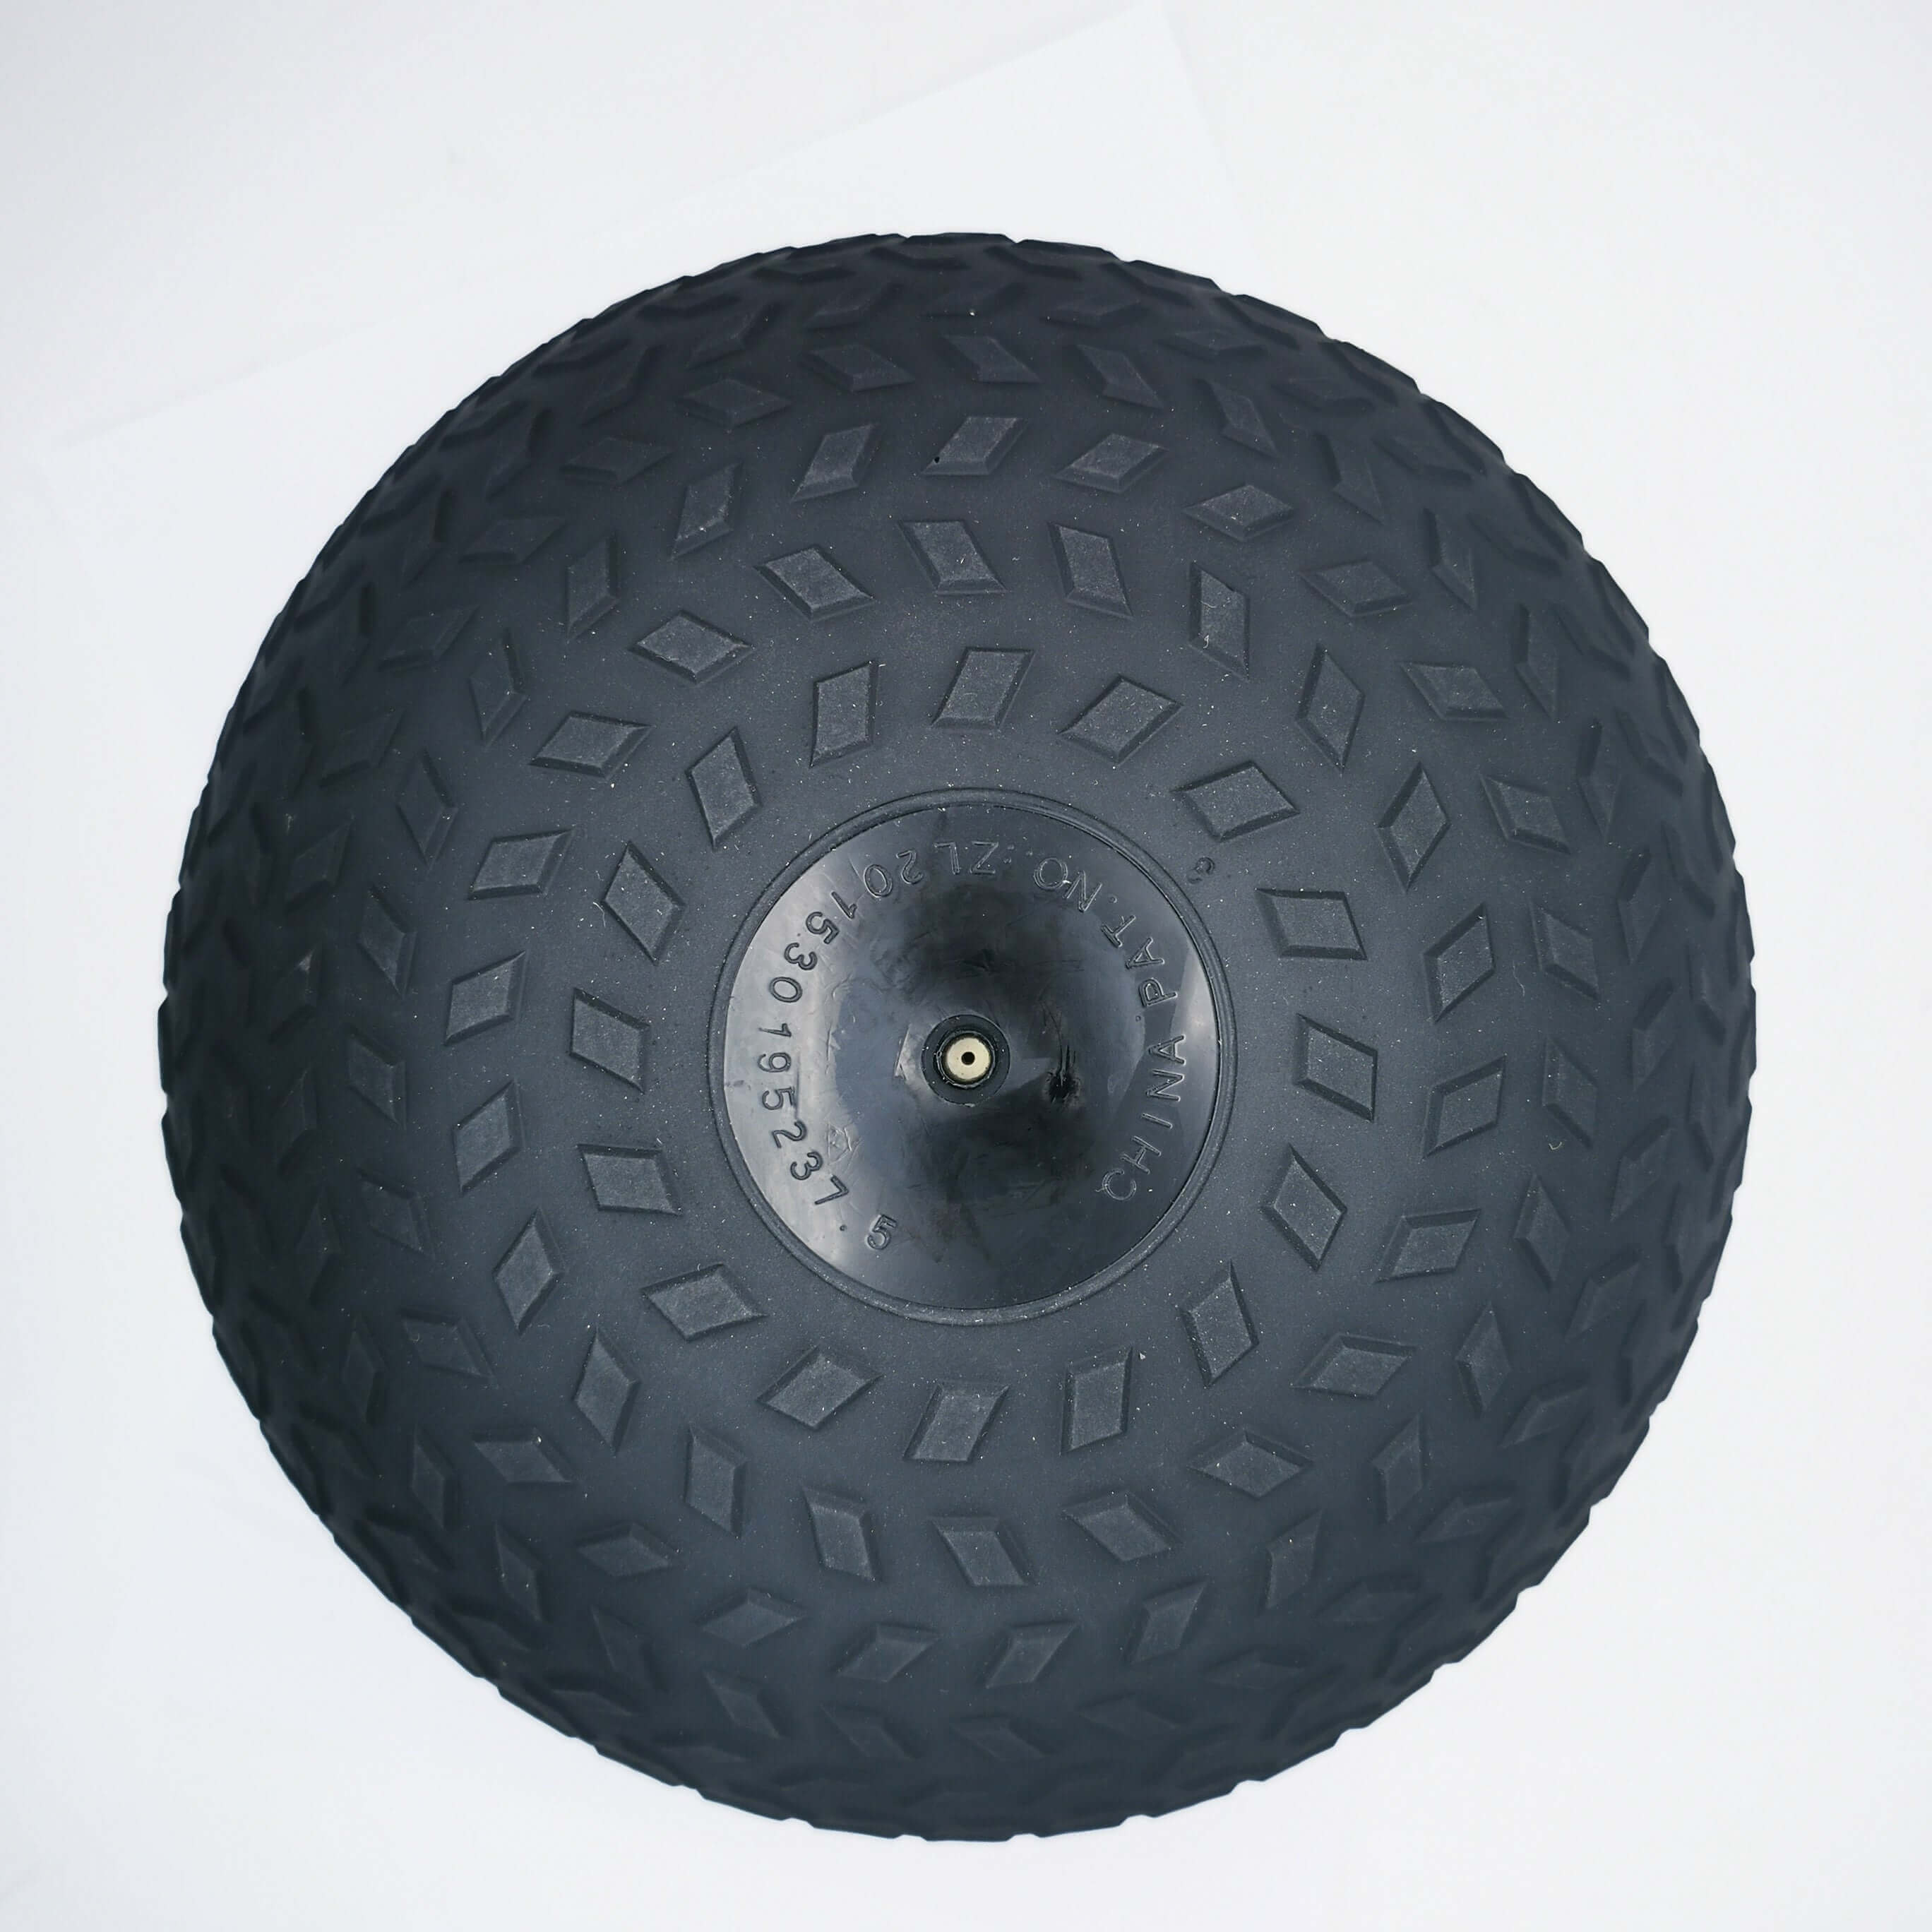 8kg Tyre Thread Slam Balls Fitness Exercise Sand Bag | INSOURCE